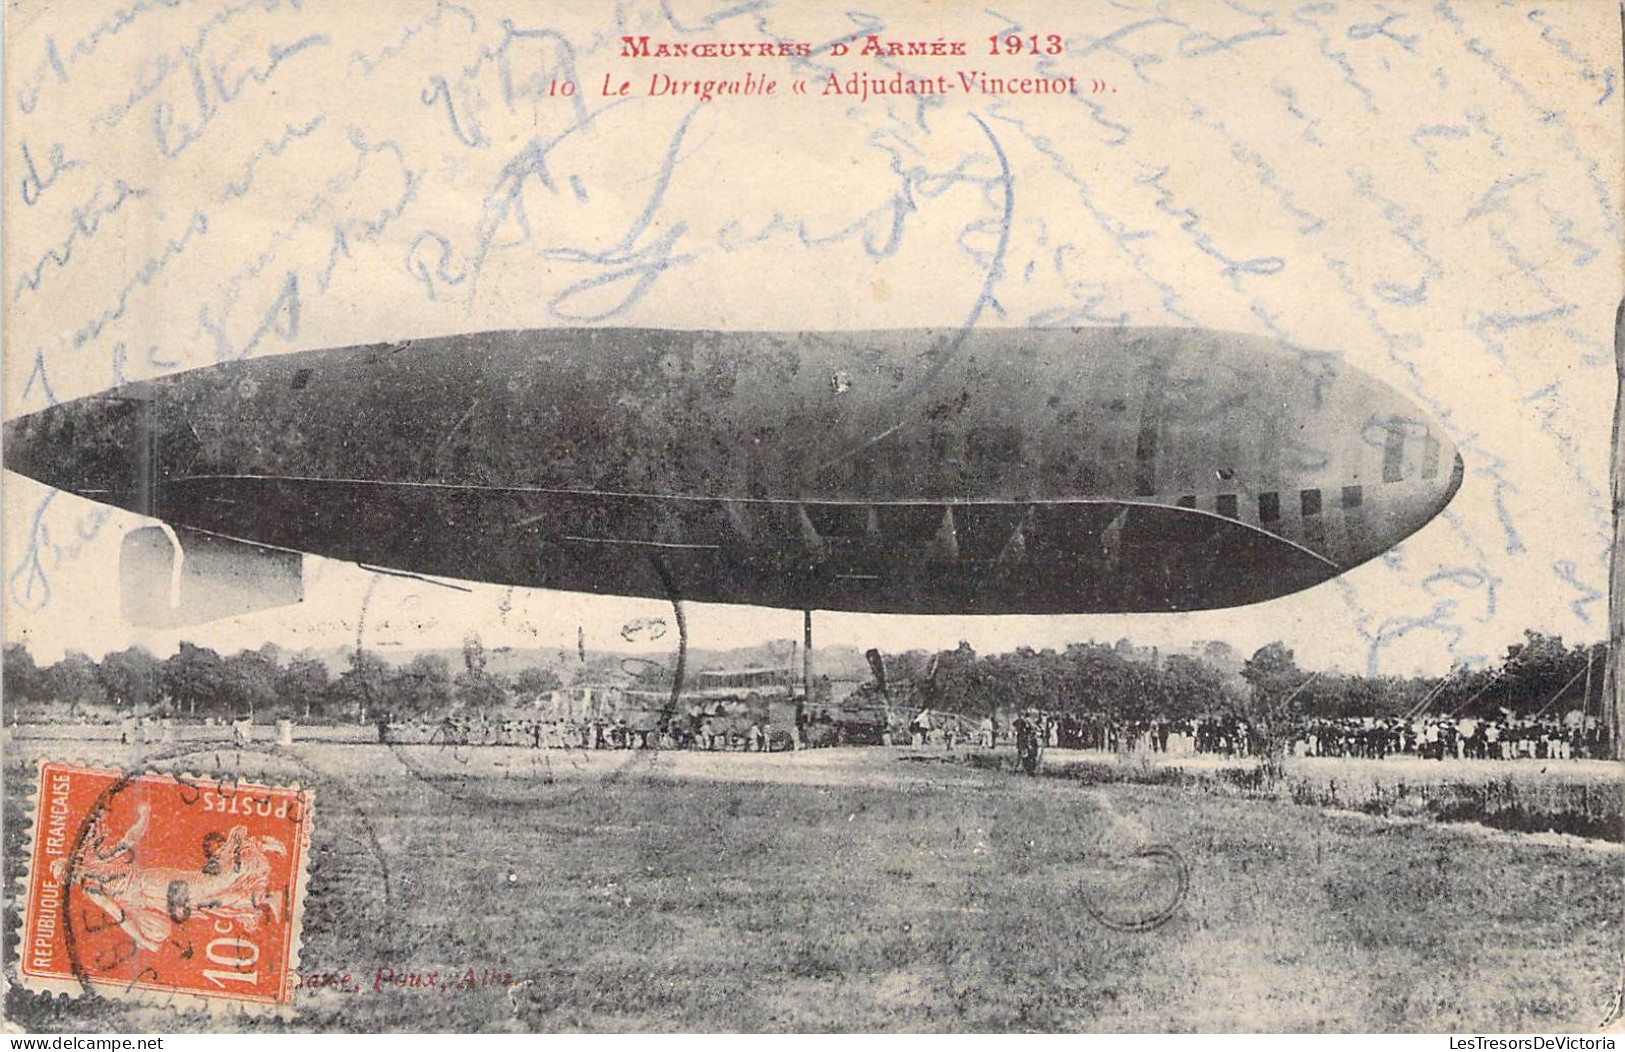 MANOEUVRES - Manoeuvre D'armée 1913 - Le Dirigeable " Adjudant Vincenot" - Carte Postale Ancienne - Maniobras